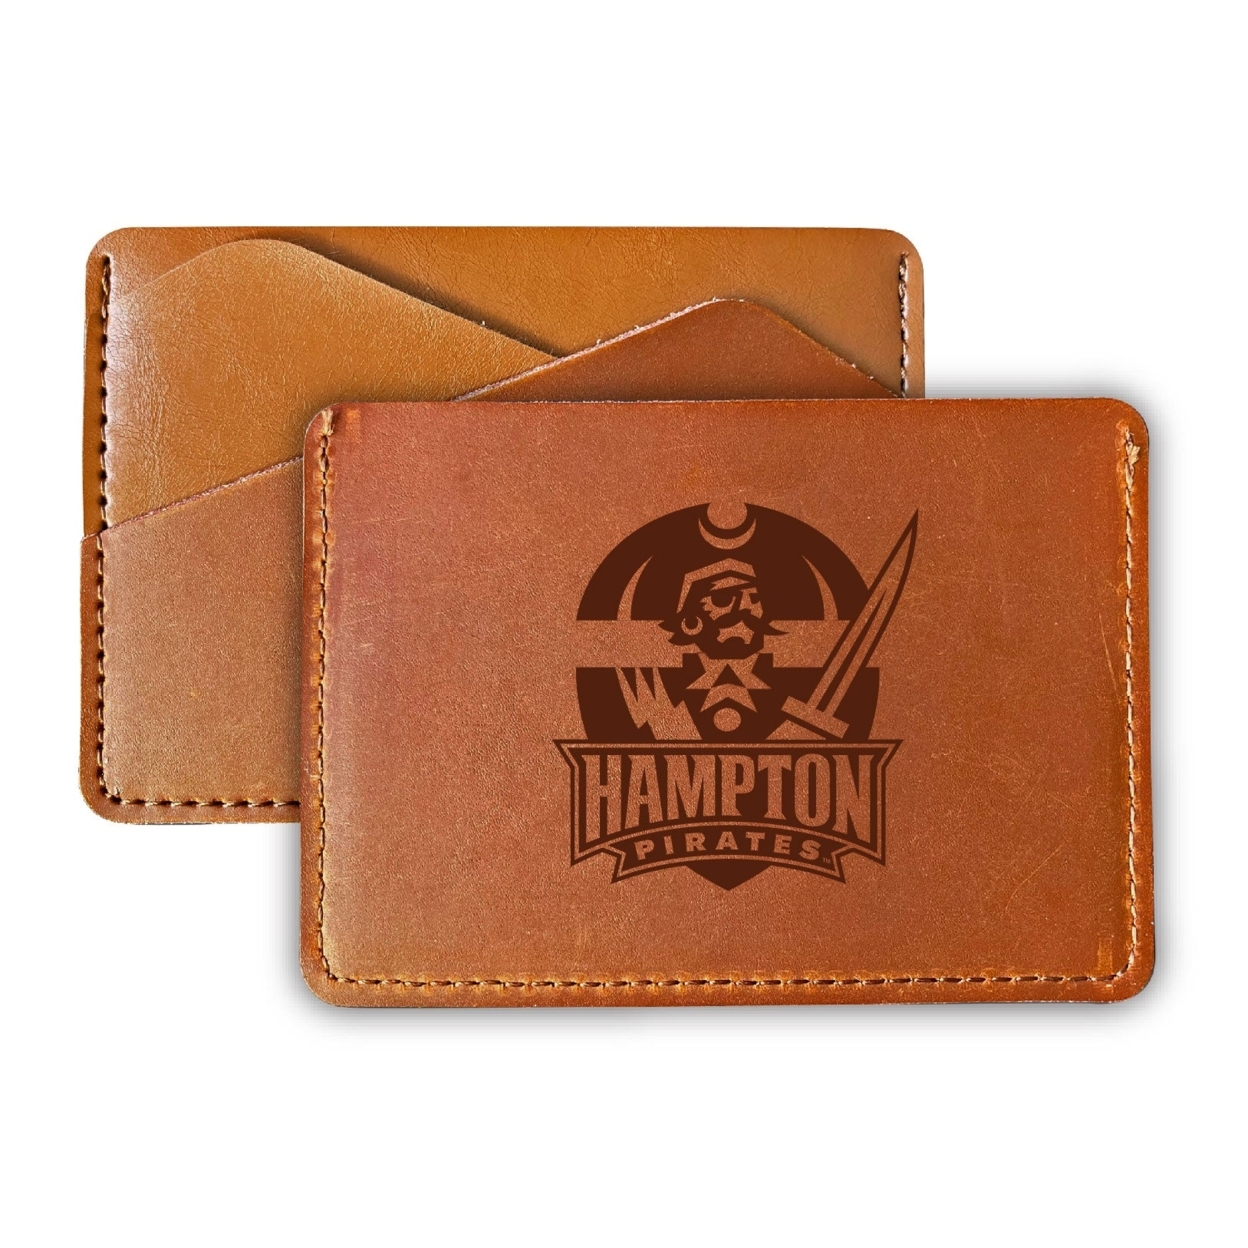 Hampton University College Leather Card Holder Wallet